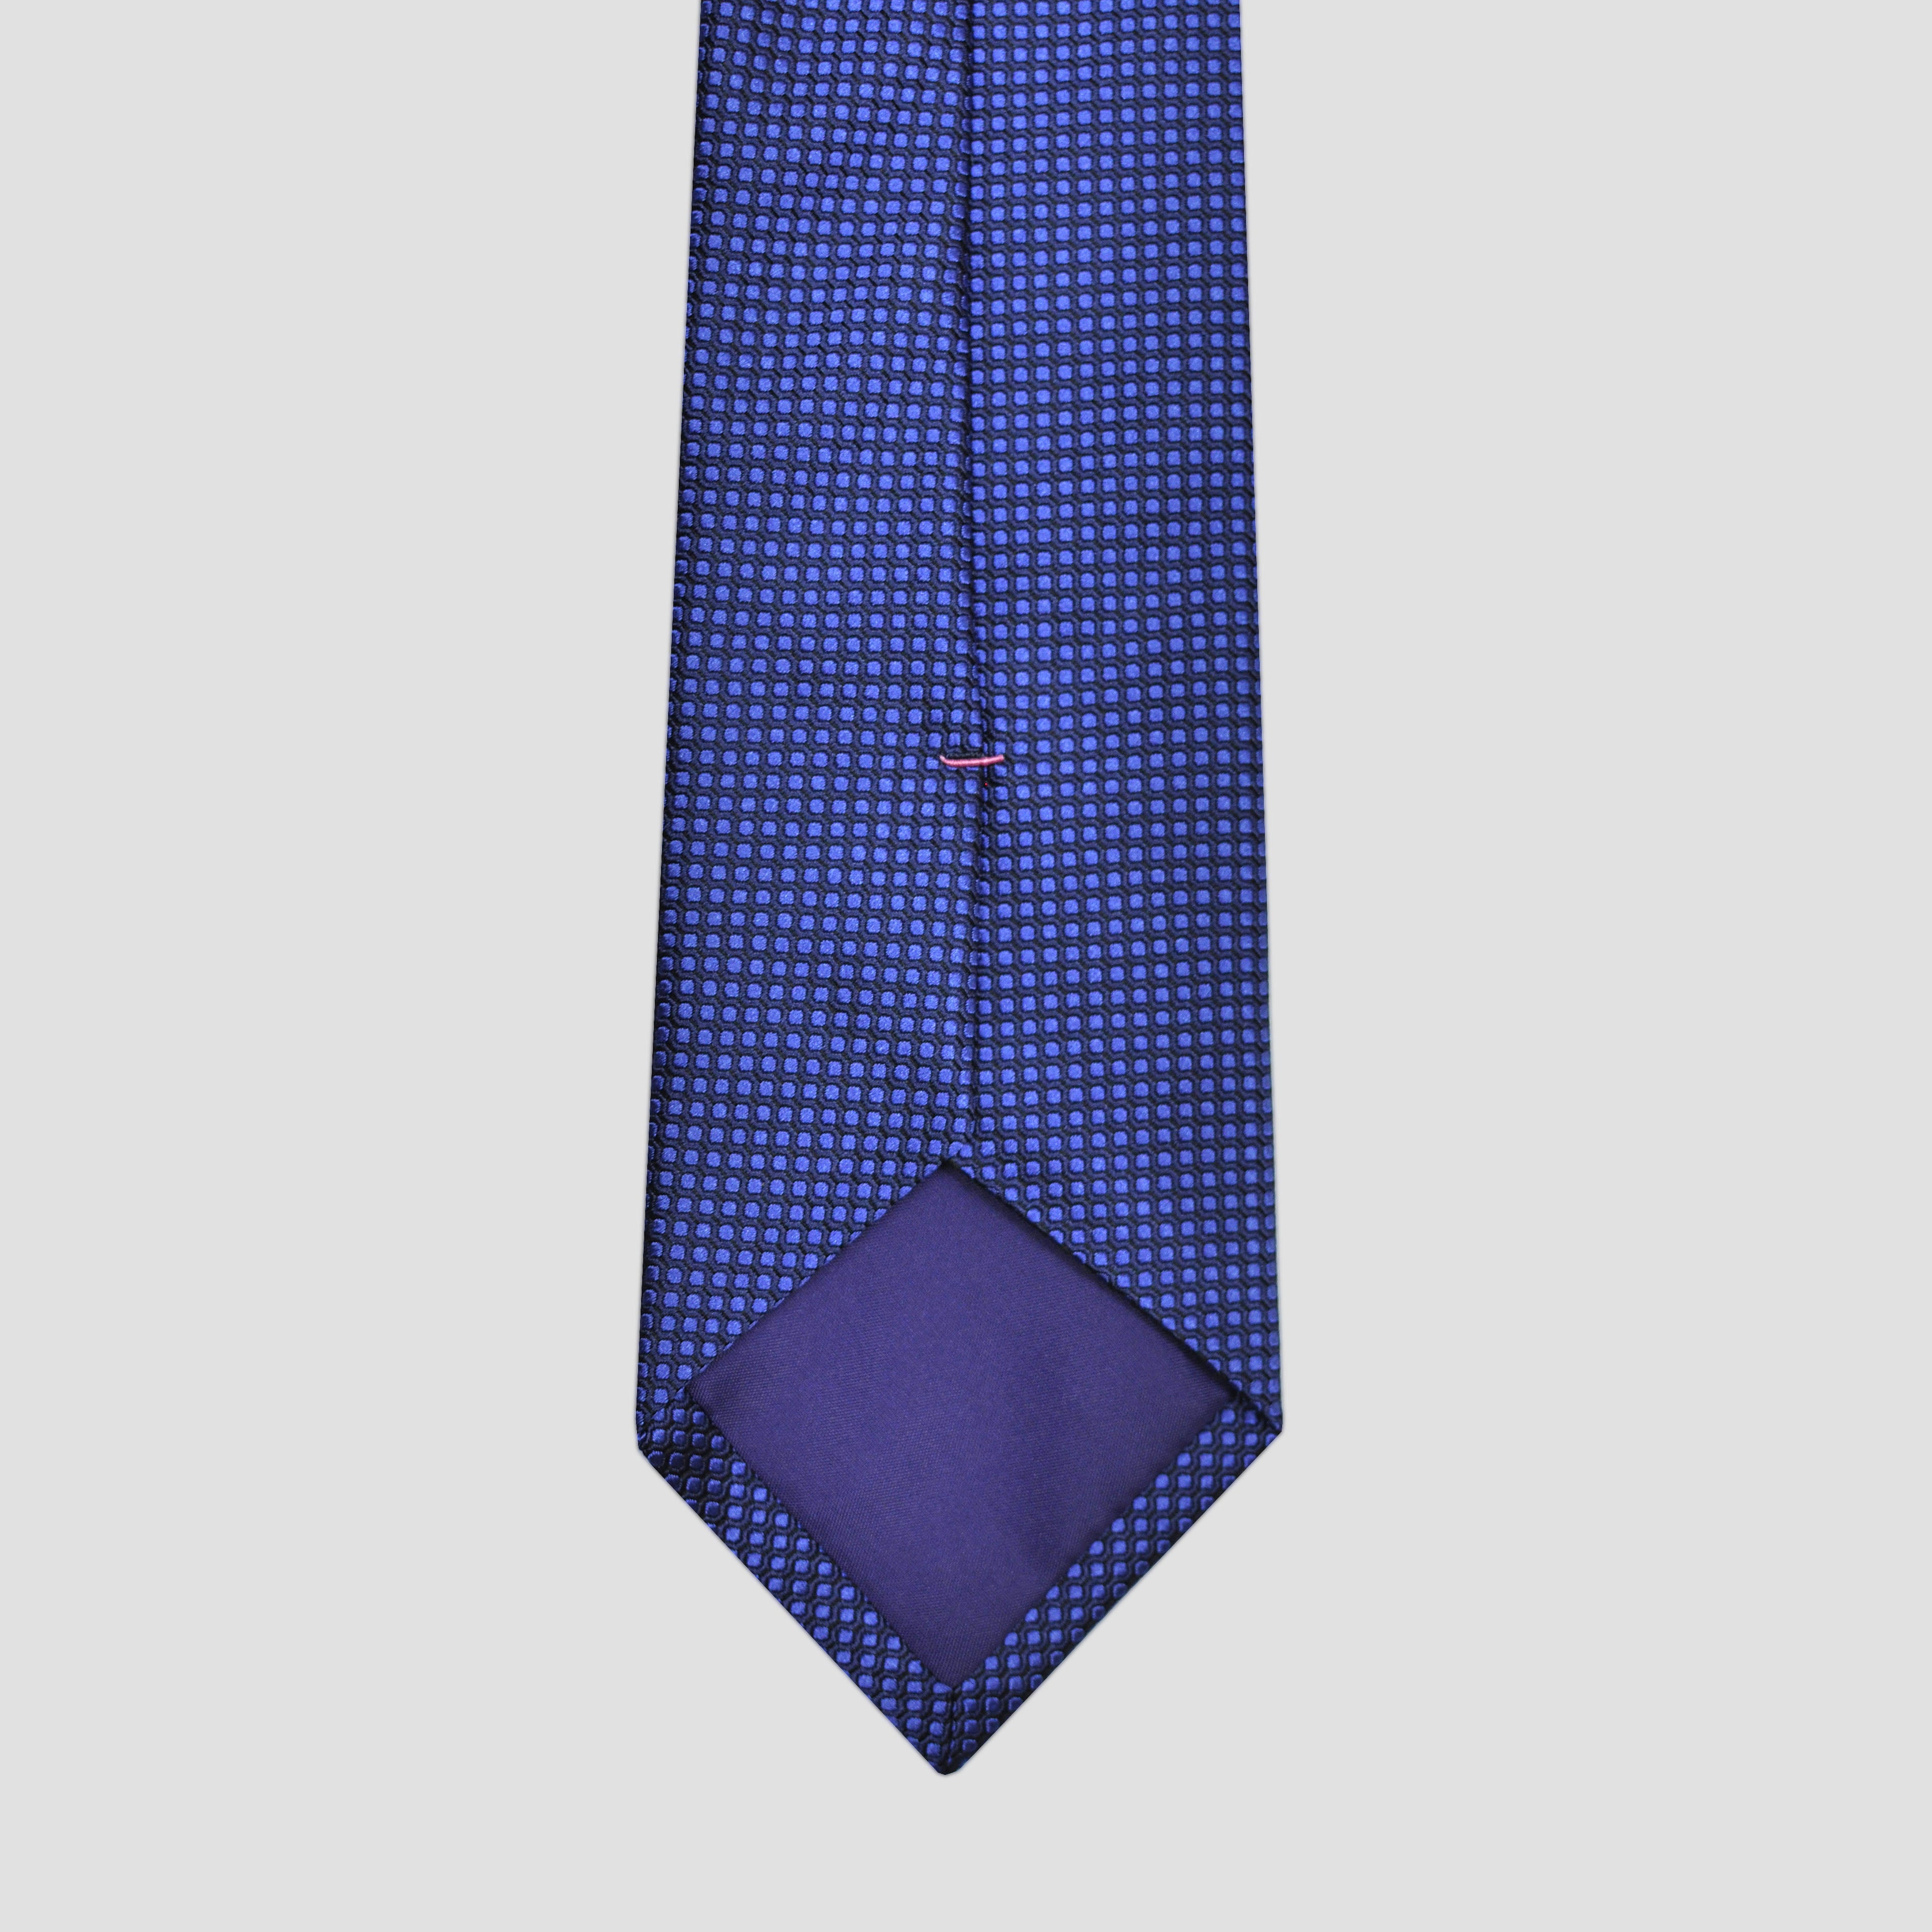 Textured Dots Woven Silk Tie in Blue